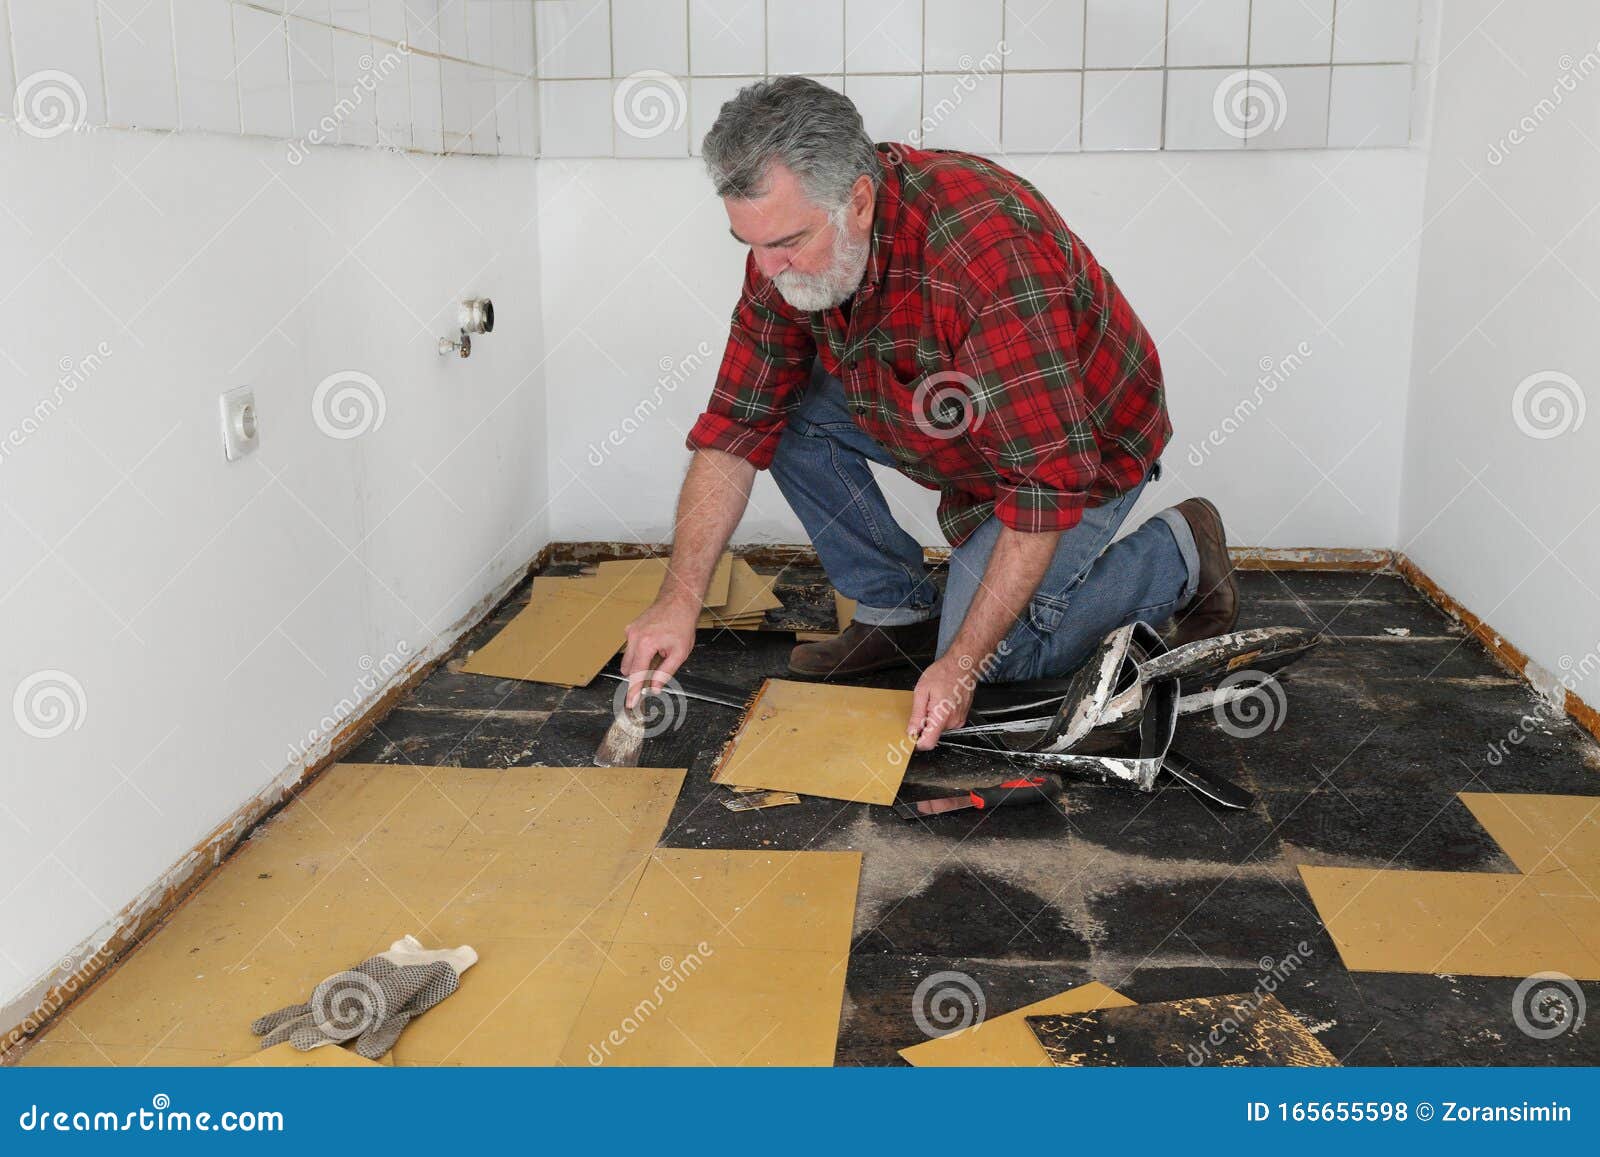 Remove Tile Flooring In Kitchen